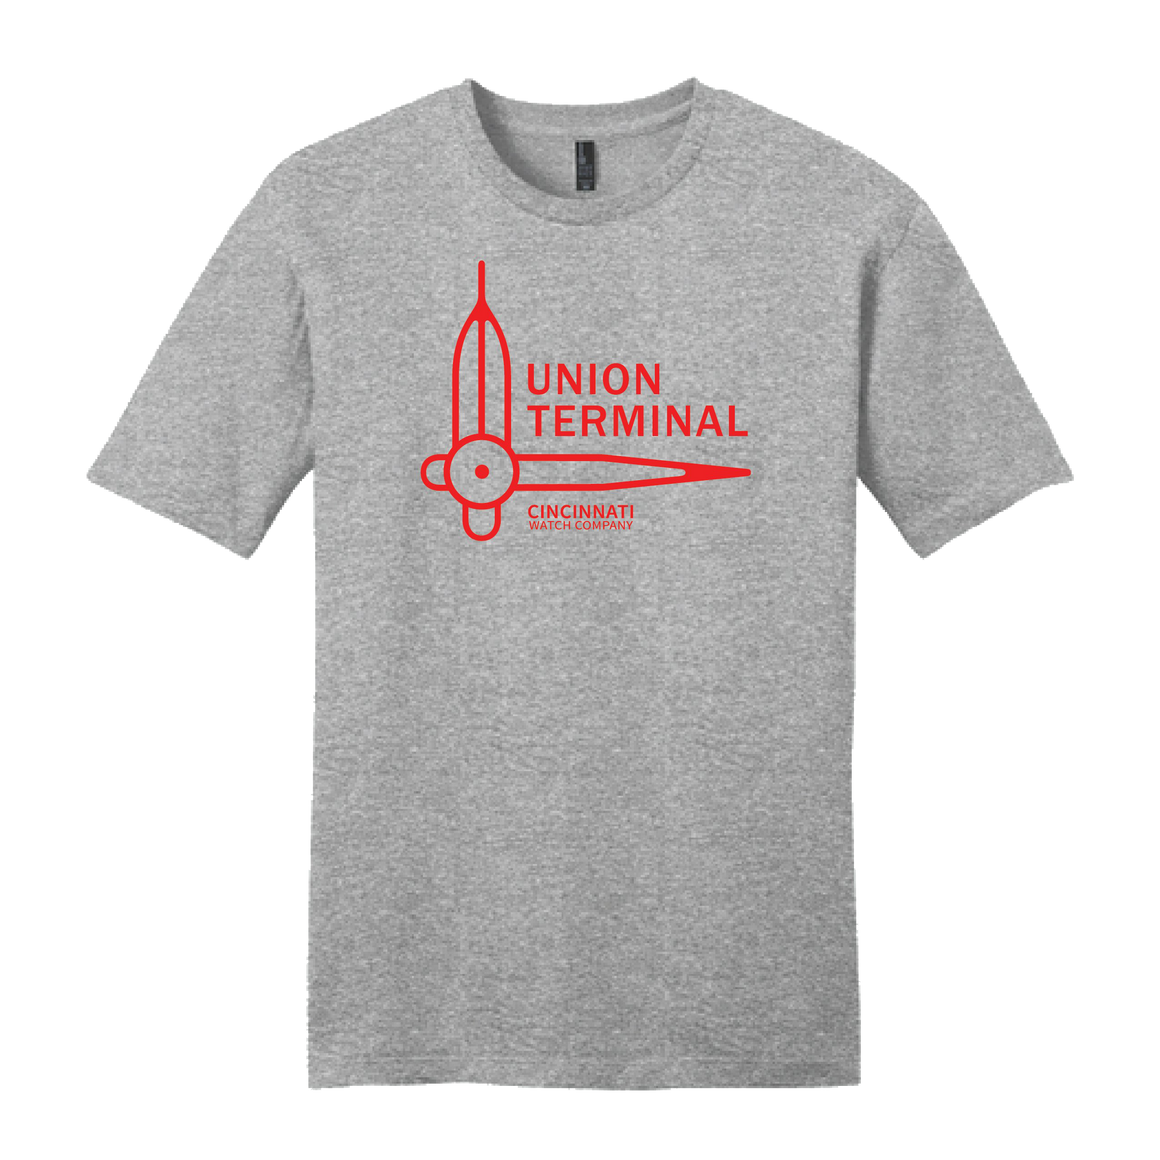 Union Terminal Watch Hands Cincinnati Watch Company - Cincy Shirts